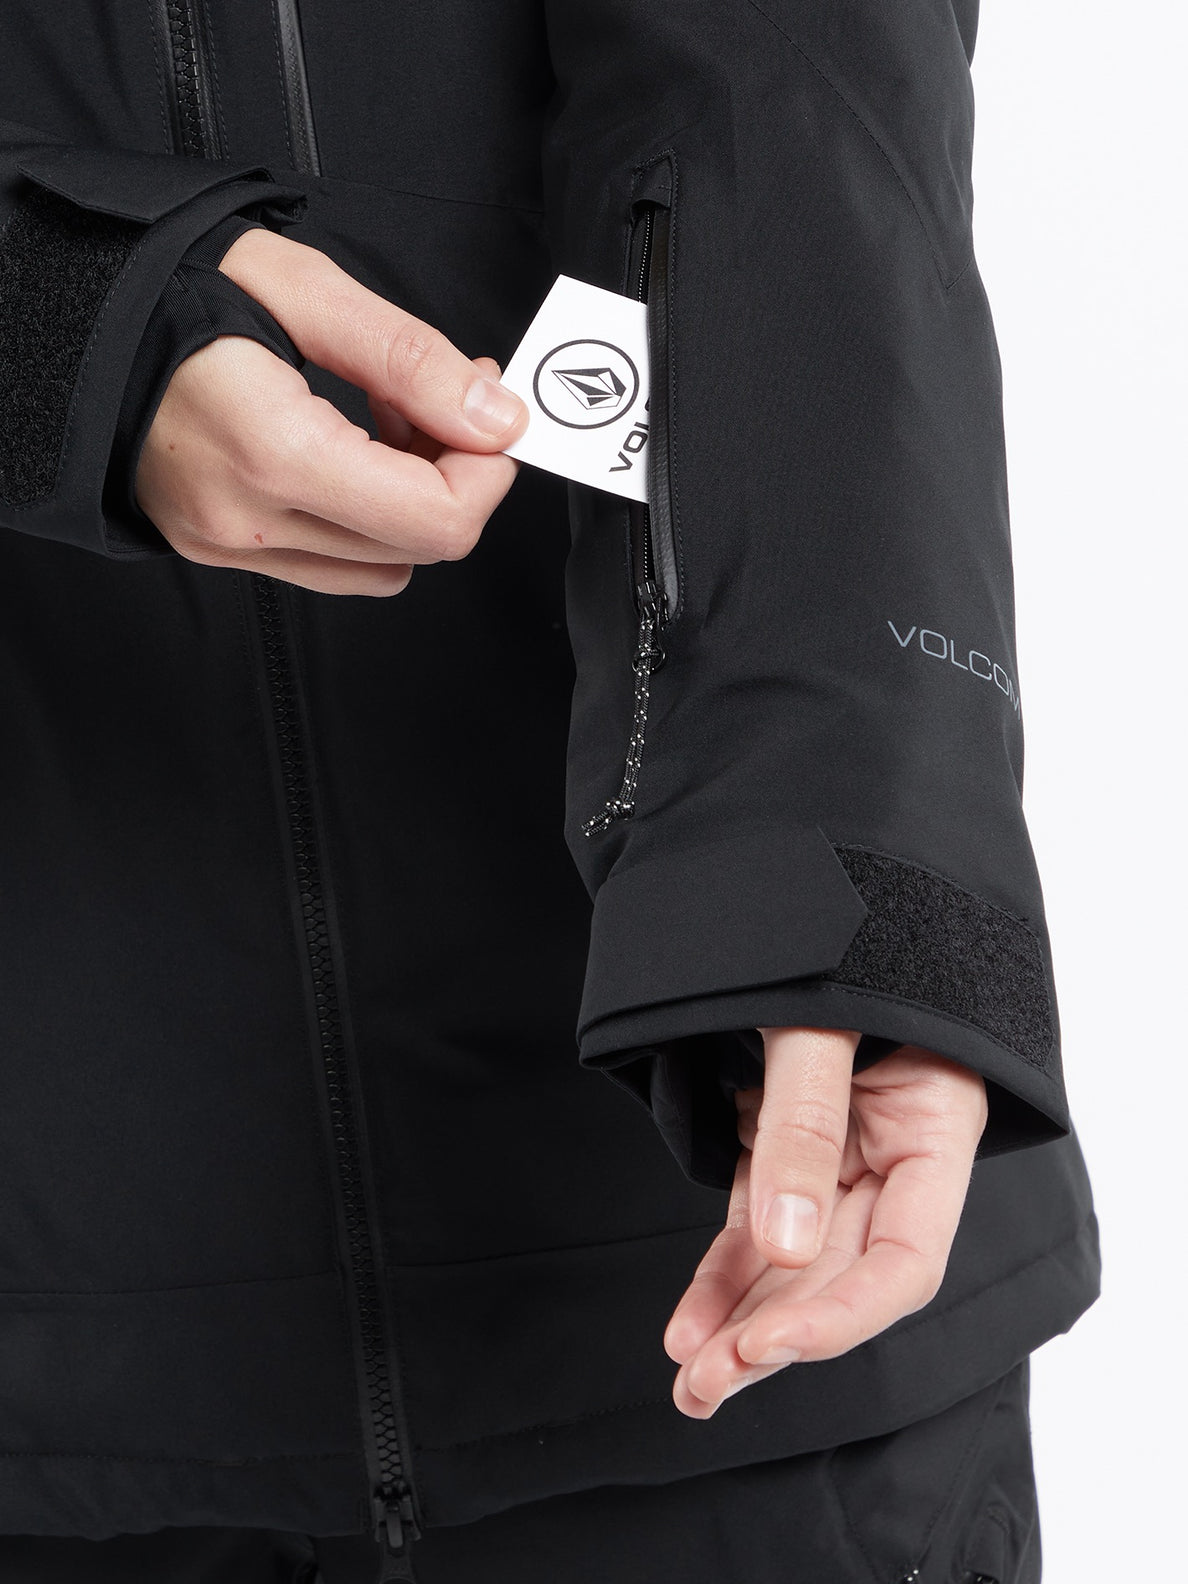 Volcom 3D Stretch GORE-TEX Jacket - Women's S Black